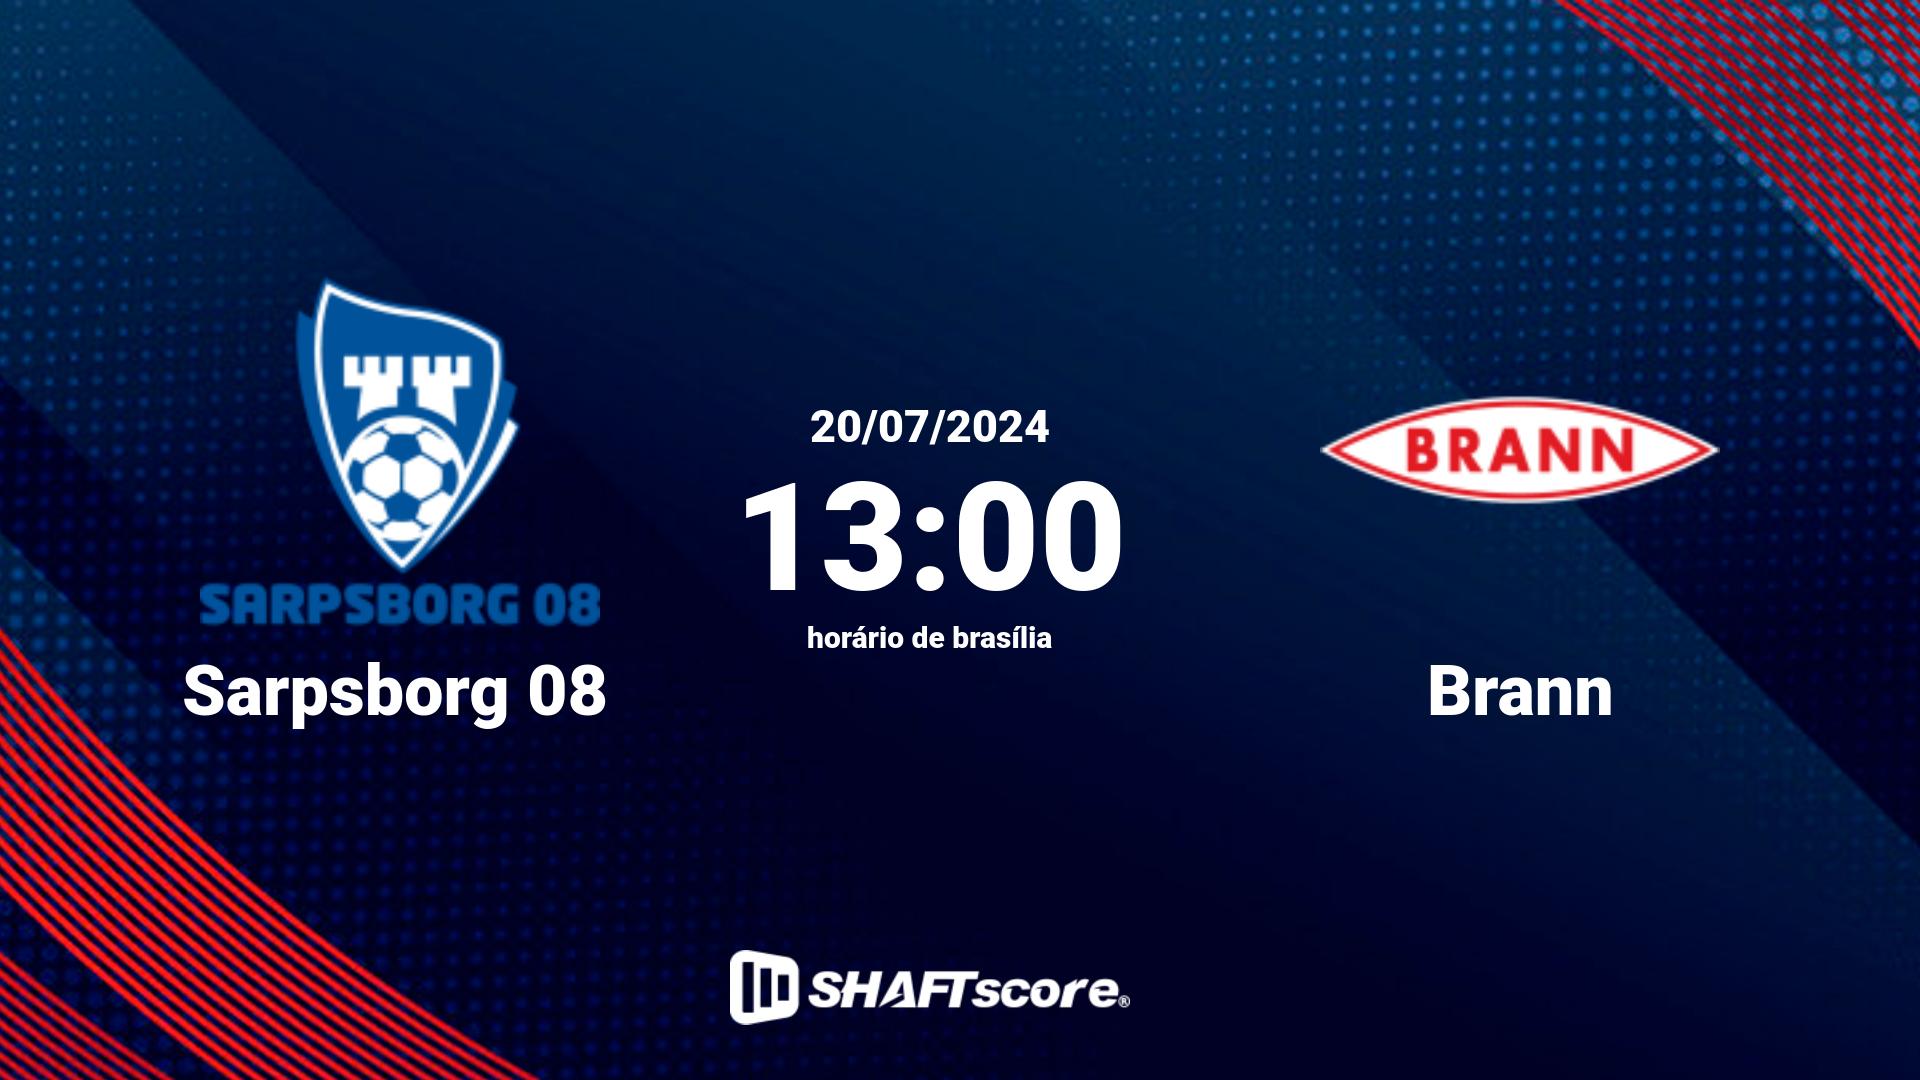 Estatísticas do jogo Sarpsborg 08 vs Brann 20.07 13:00